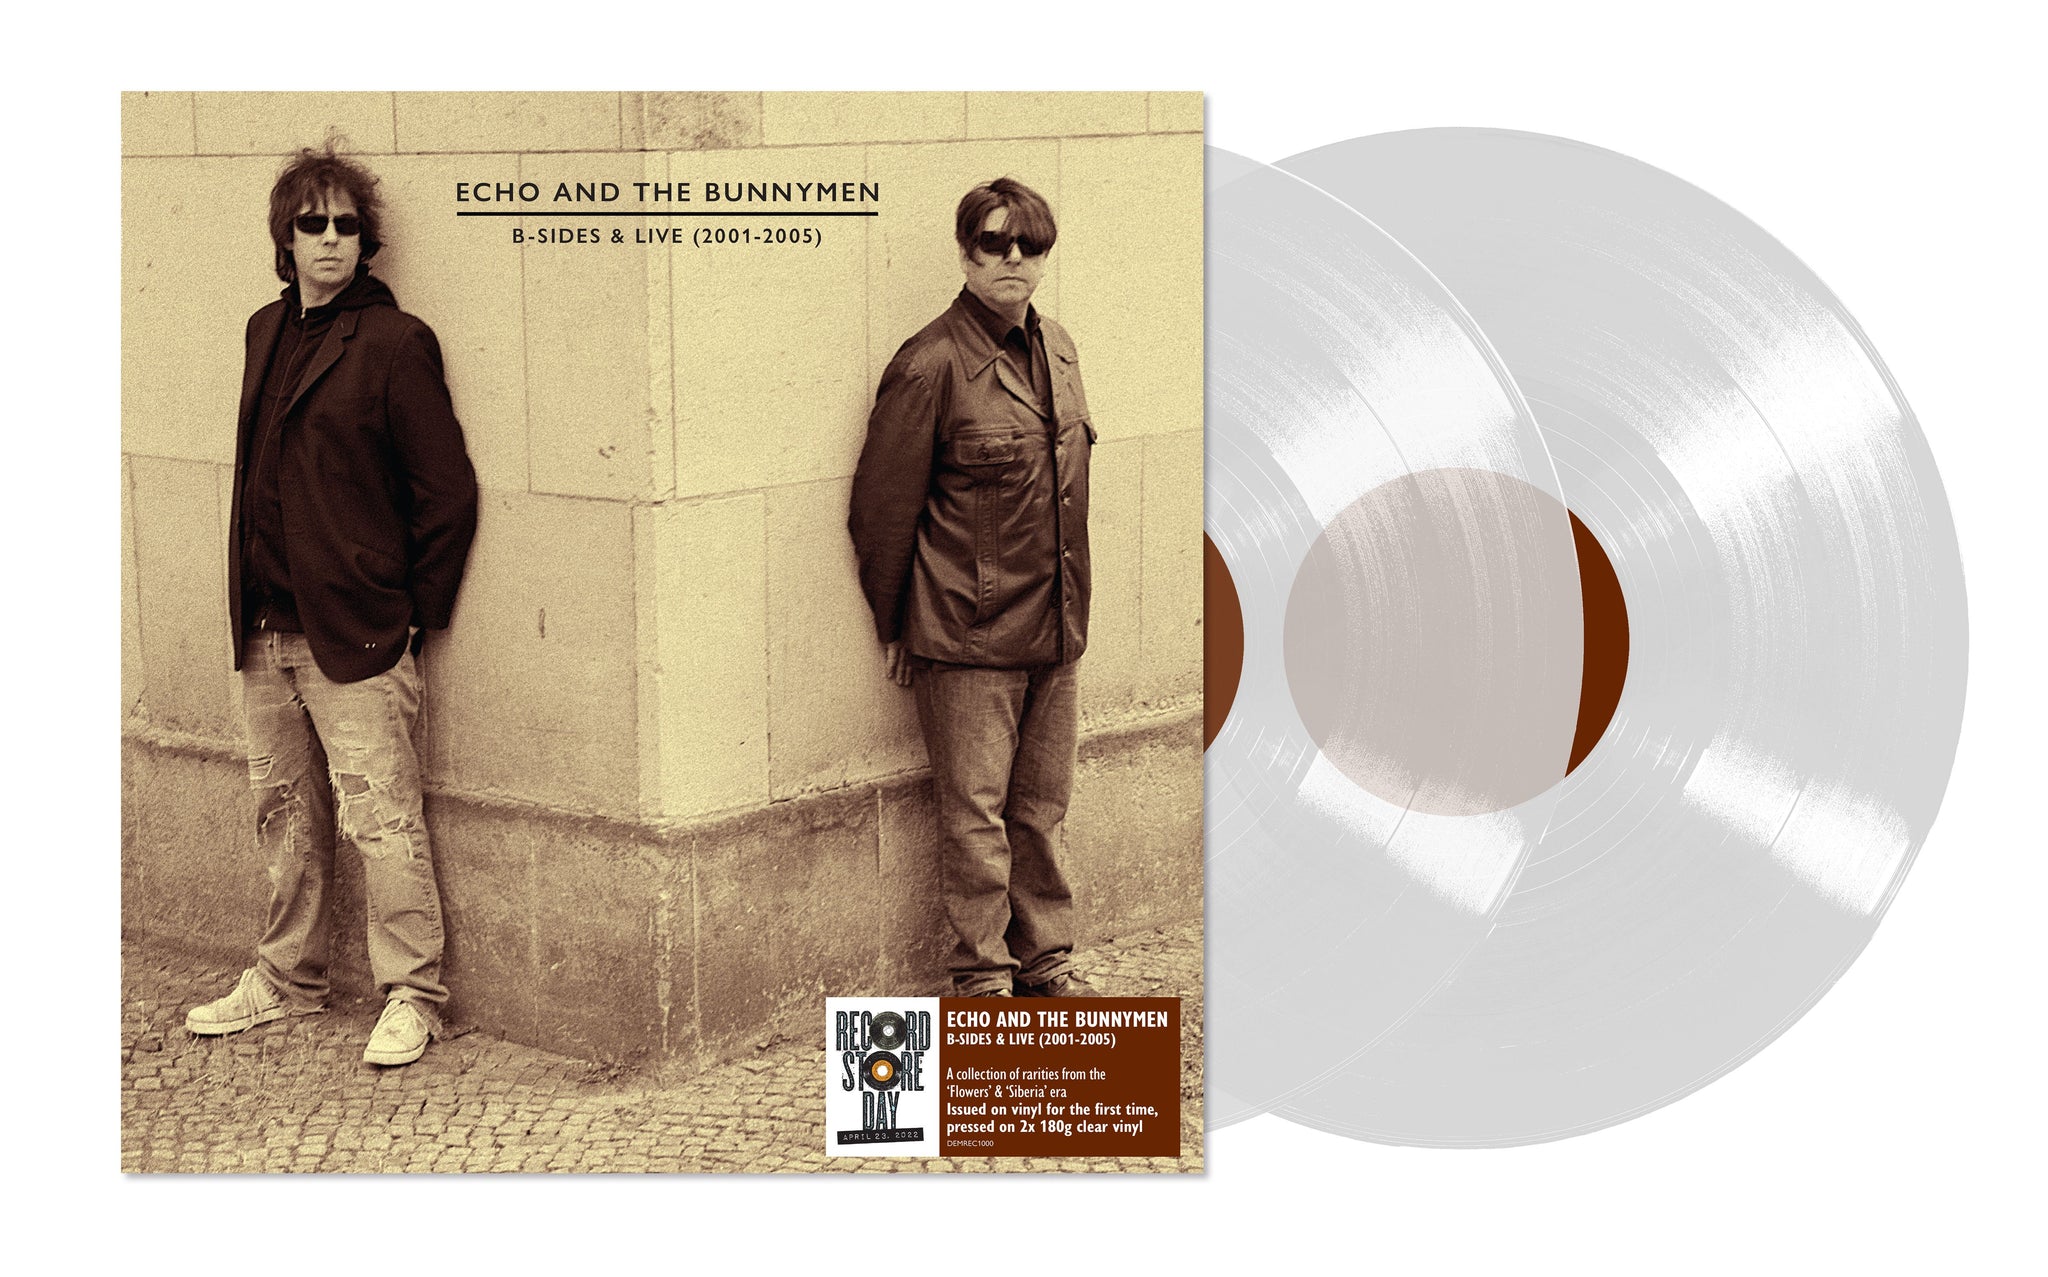 ECHO & THE BUNNYMEN - B-SIDES & LIVE (2001-2005) - 2 x CLEAR COLOURED VINYL LP SET